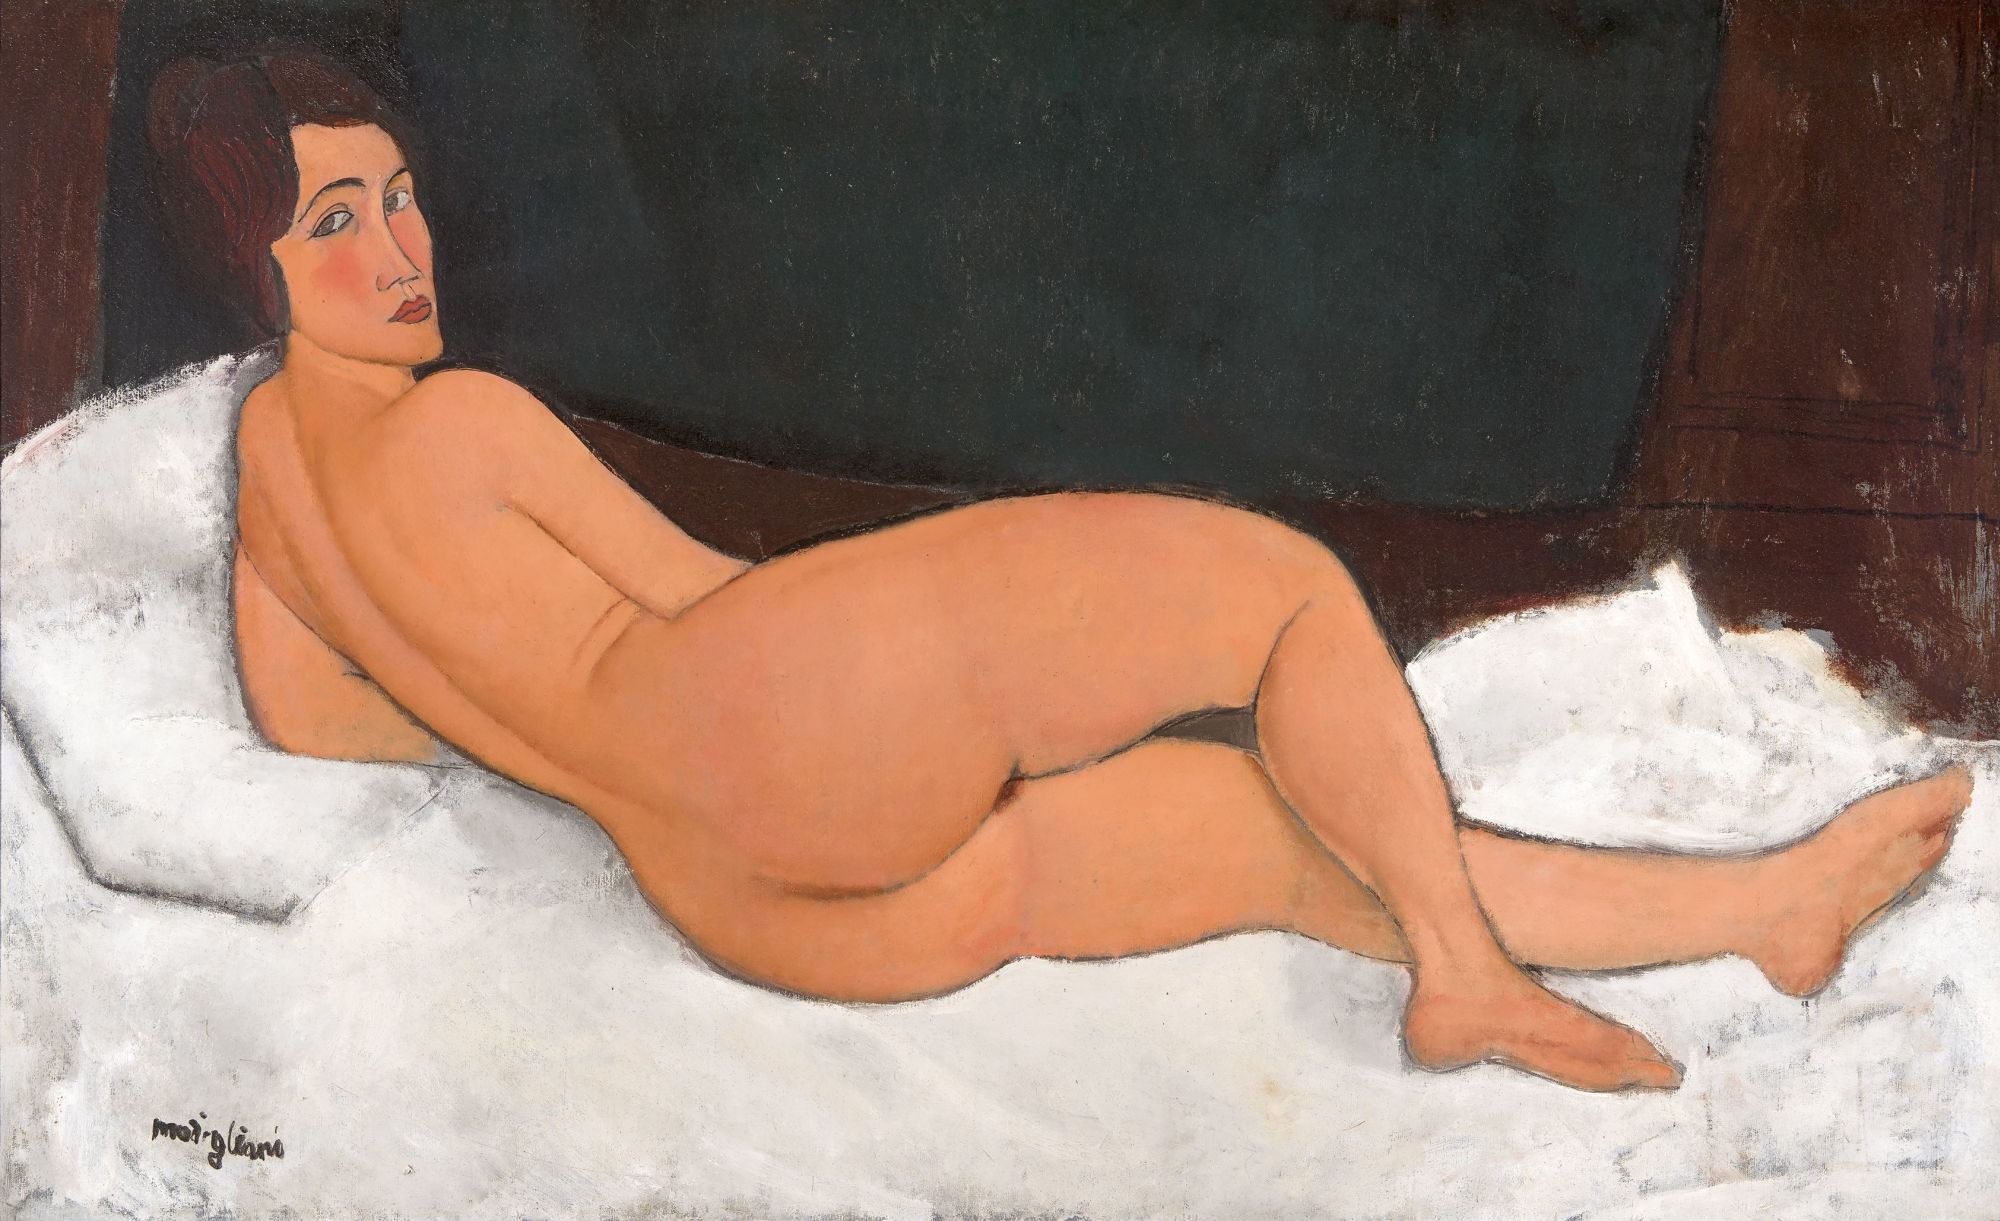 Tumview Nudest Nudists - Nude art and censorship laid bare | CNN